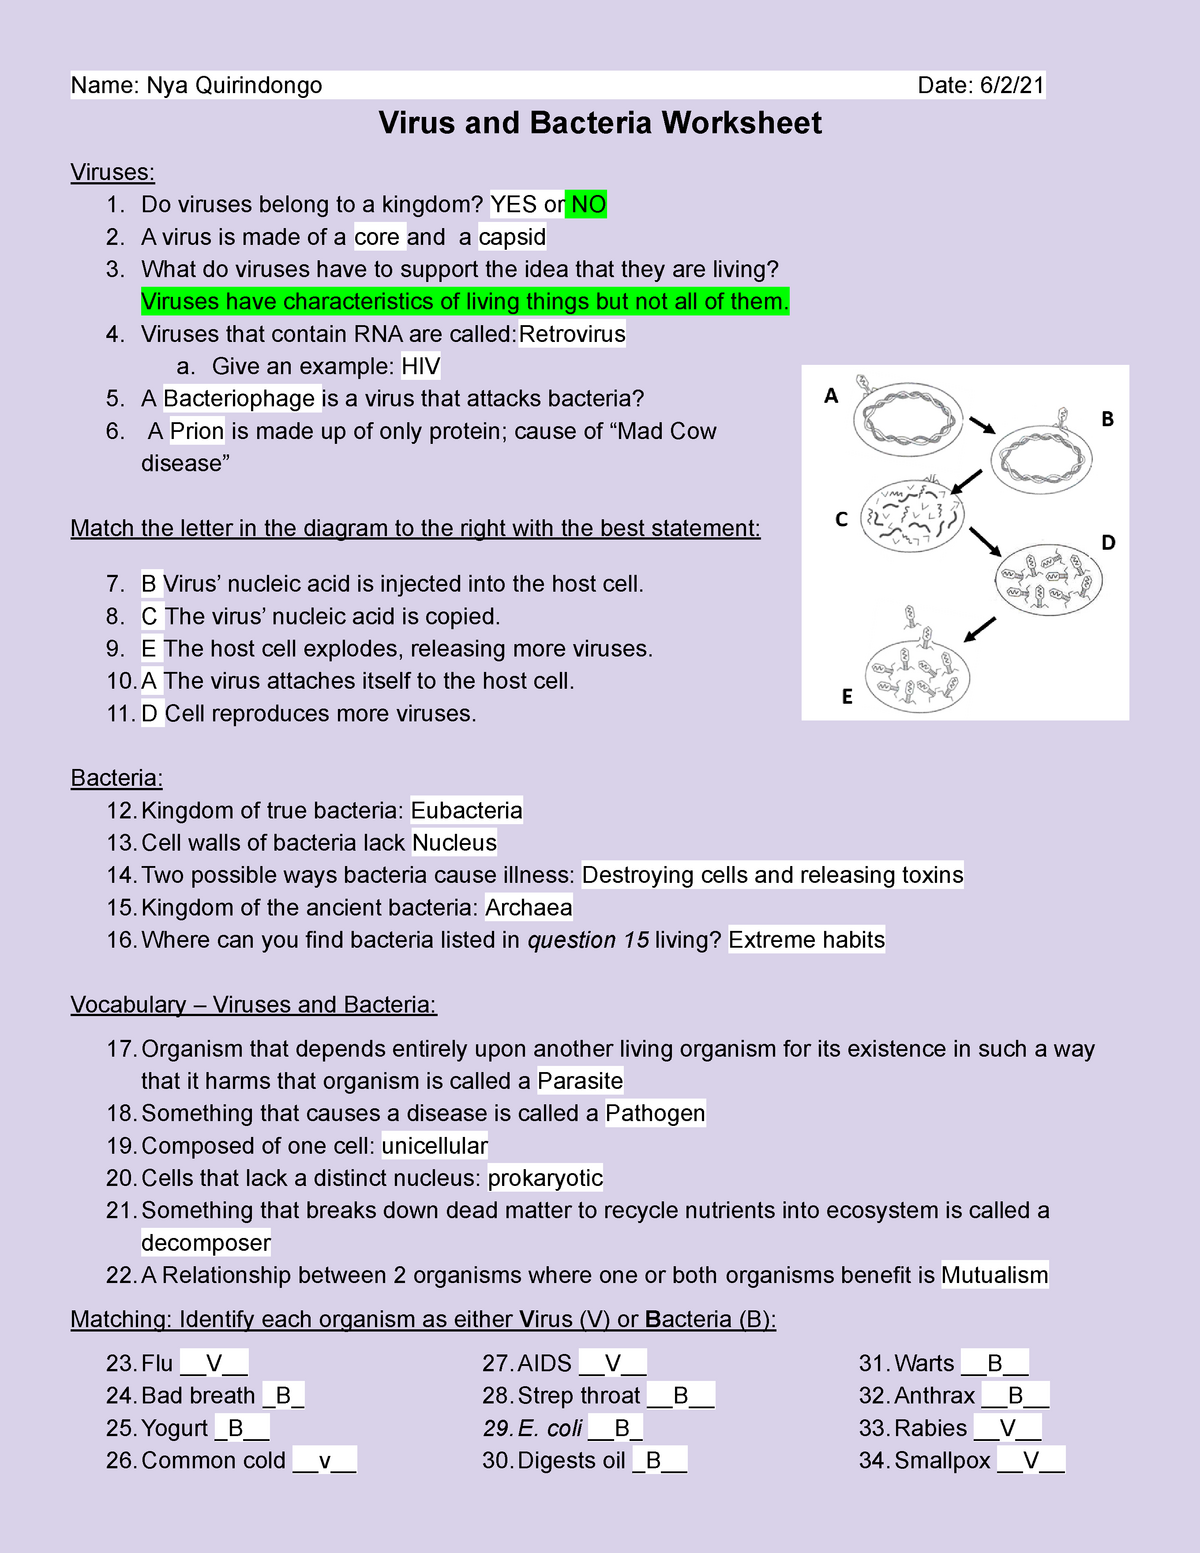 Copy of Virus and Bacteria Worksheet - BIO20 - General Biology Pertaining To Virus And Bacteria Worksheet Key